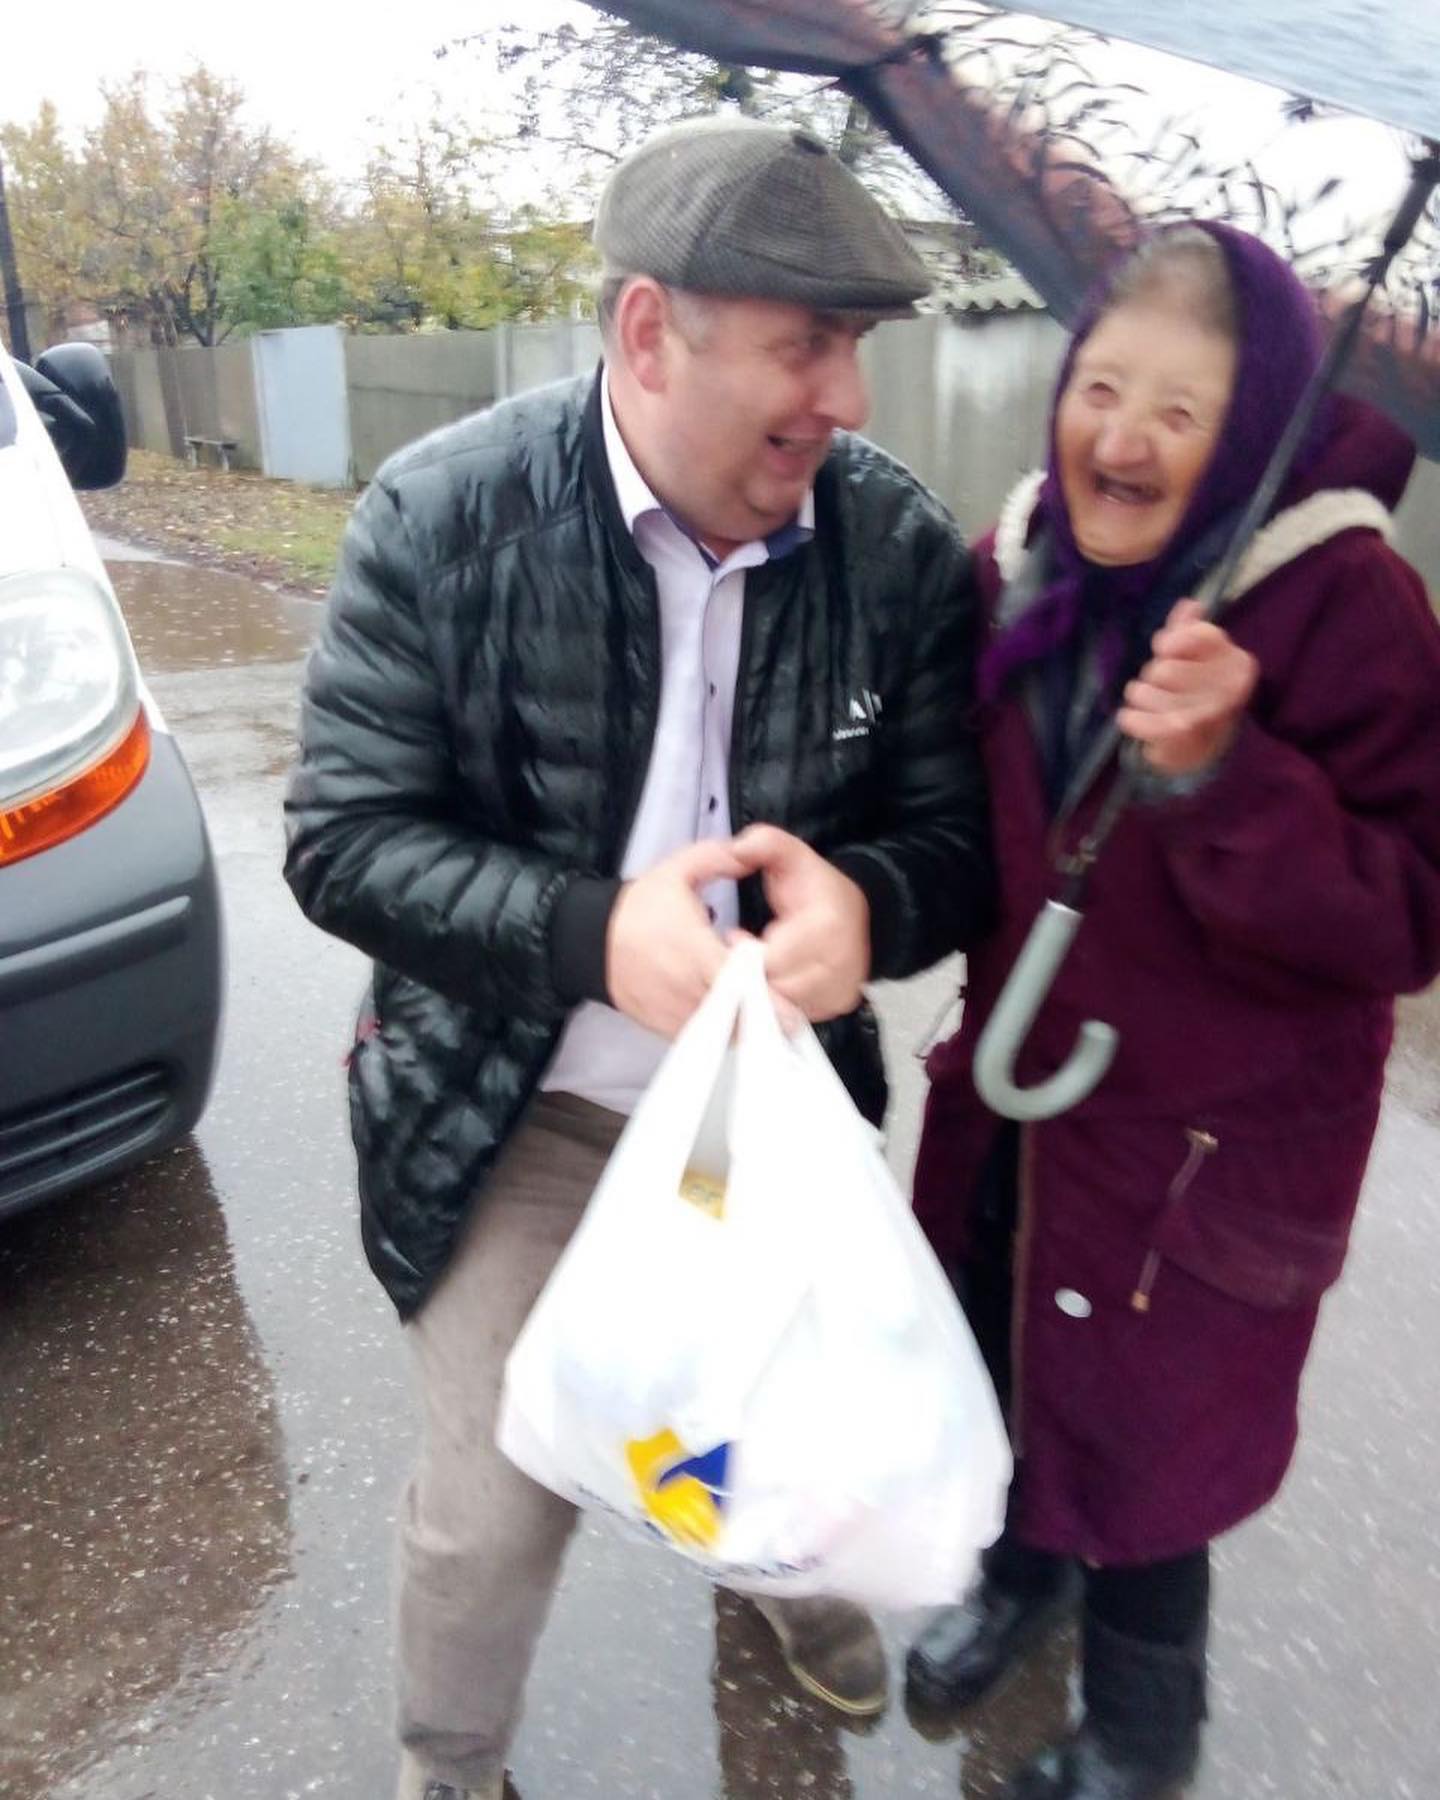 A man holding an umbrella and a woman holding a bag.